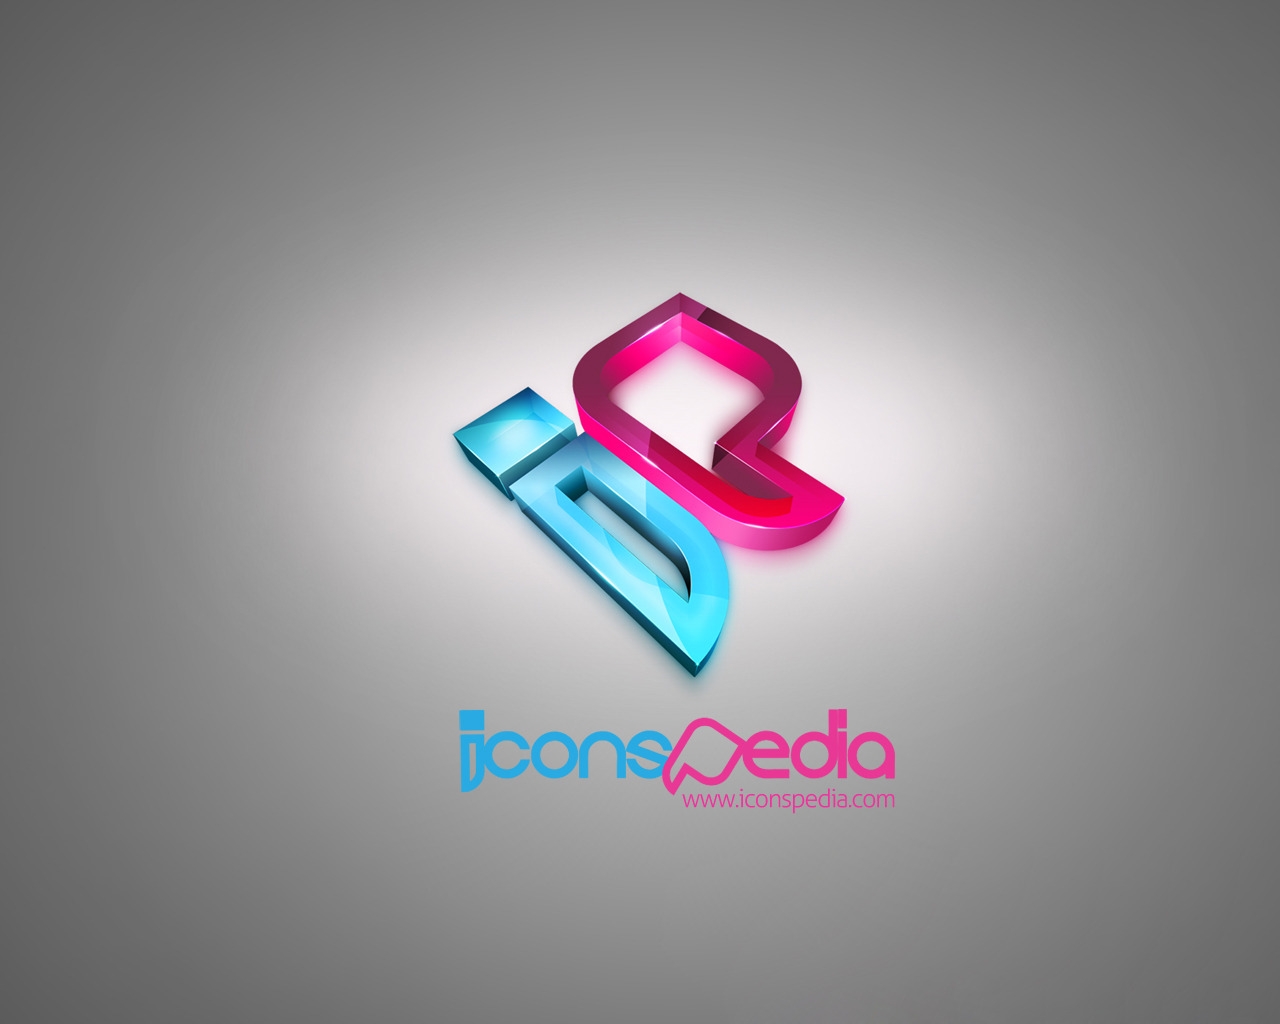 Iconspedia Logo for 1280 x 1024 resolution